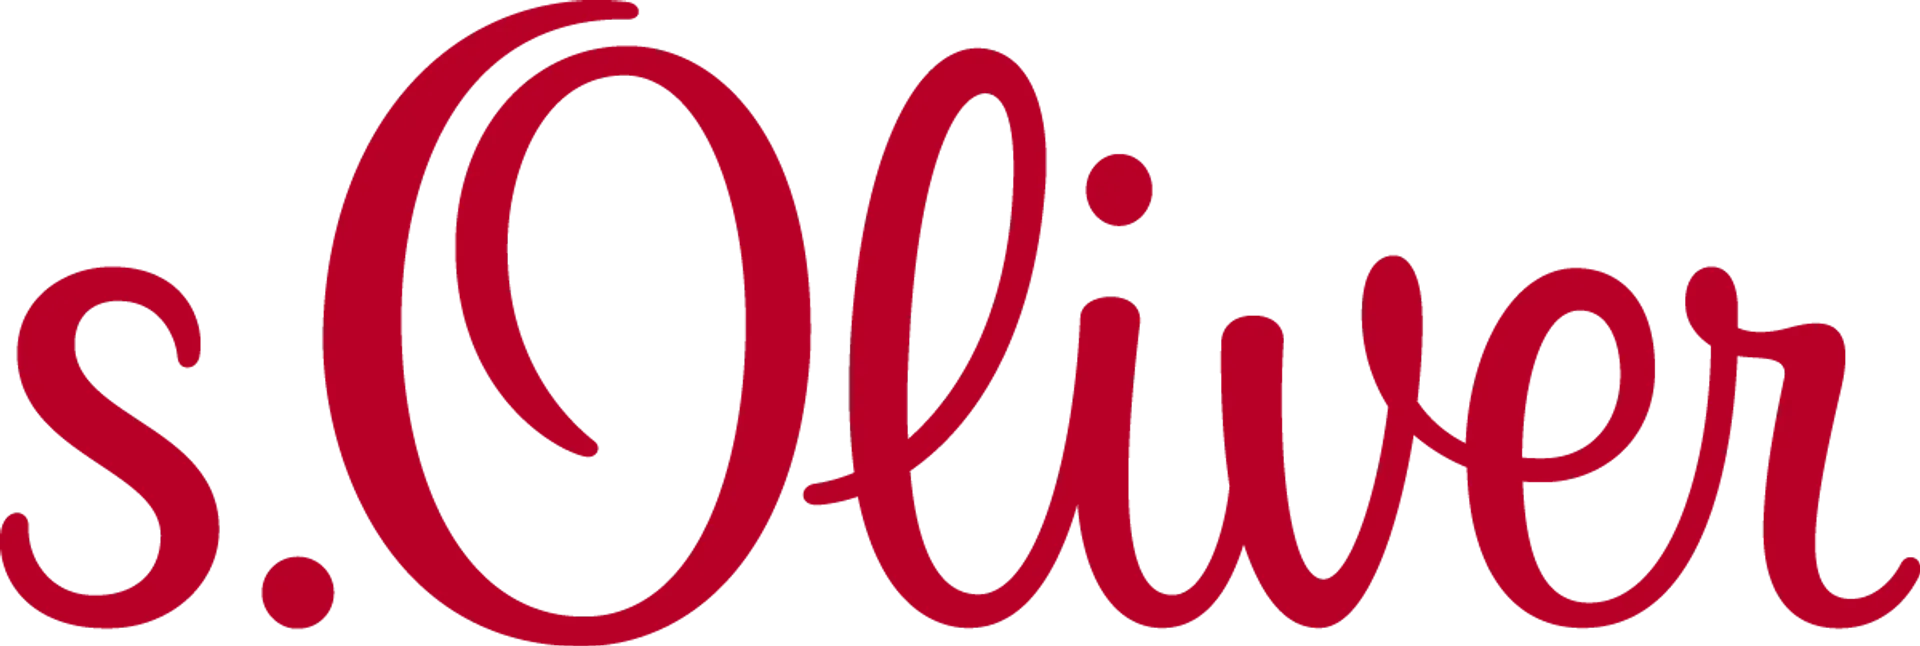 S.OLIVER logo